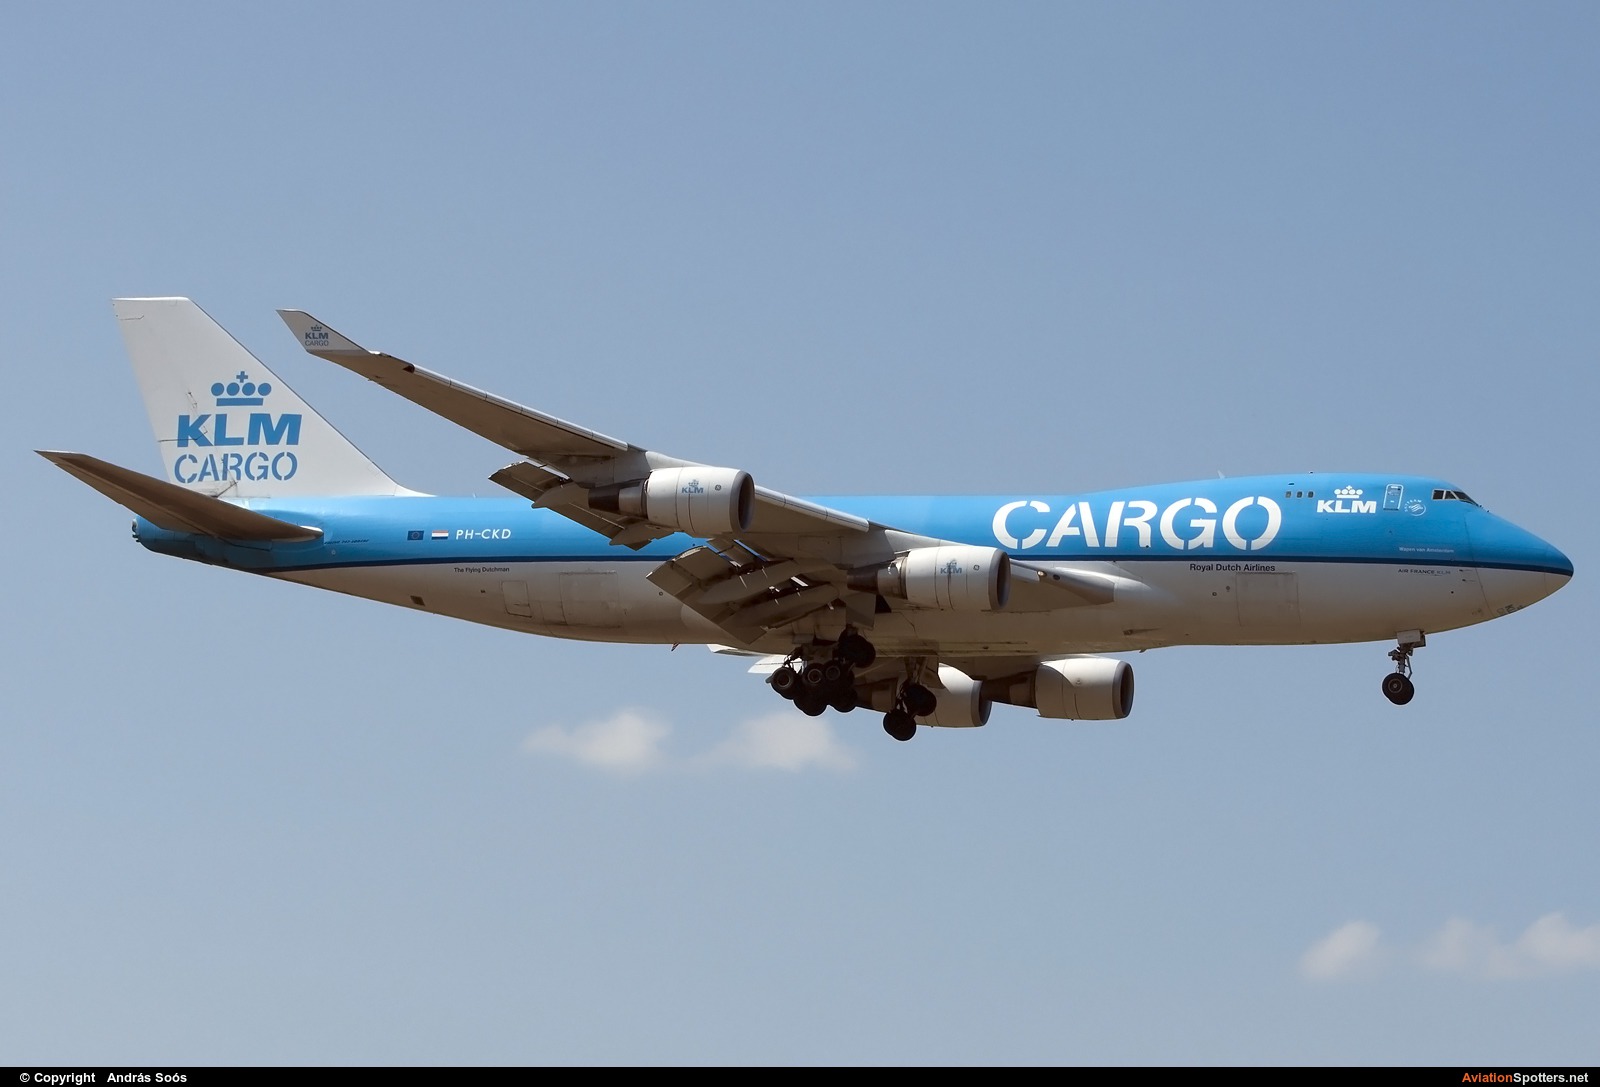 KLM Cargo  -  747-400F  (PH-CKD) By András Soós (sas1965)